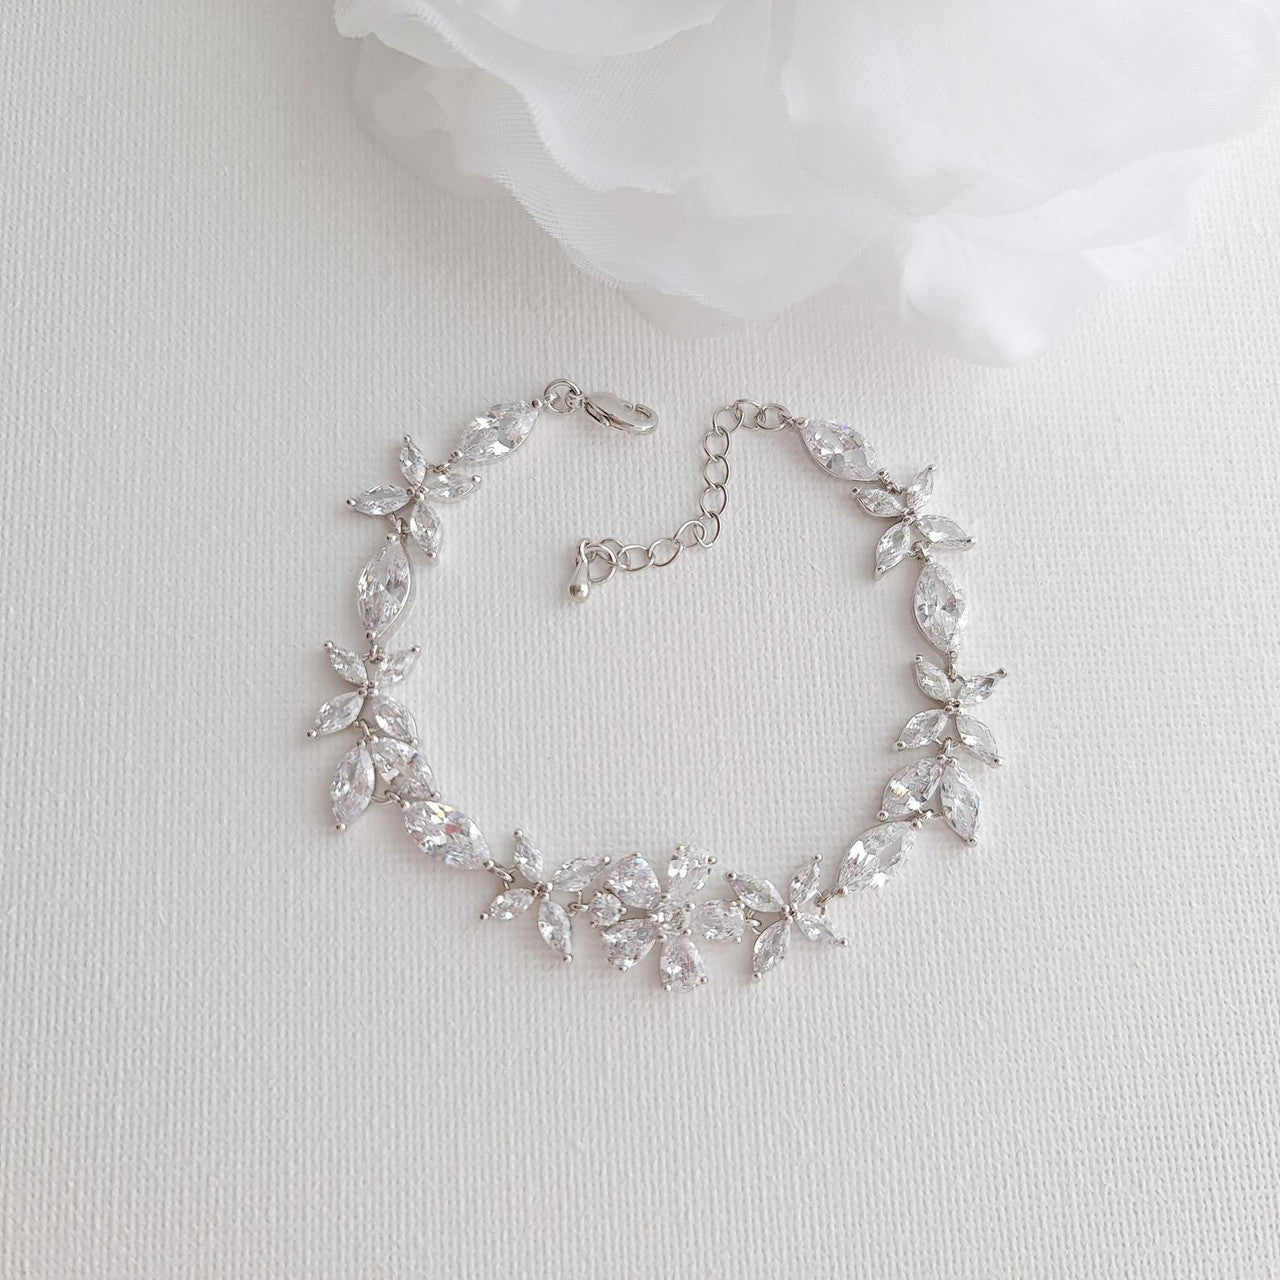 Floral Bridal Bracelet in Rose Gold & CZ Crystals- Daisy